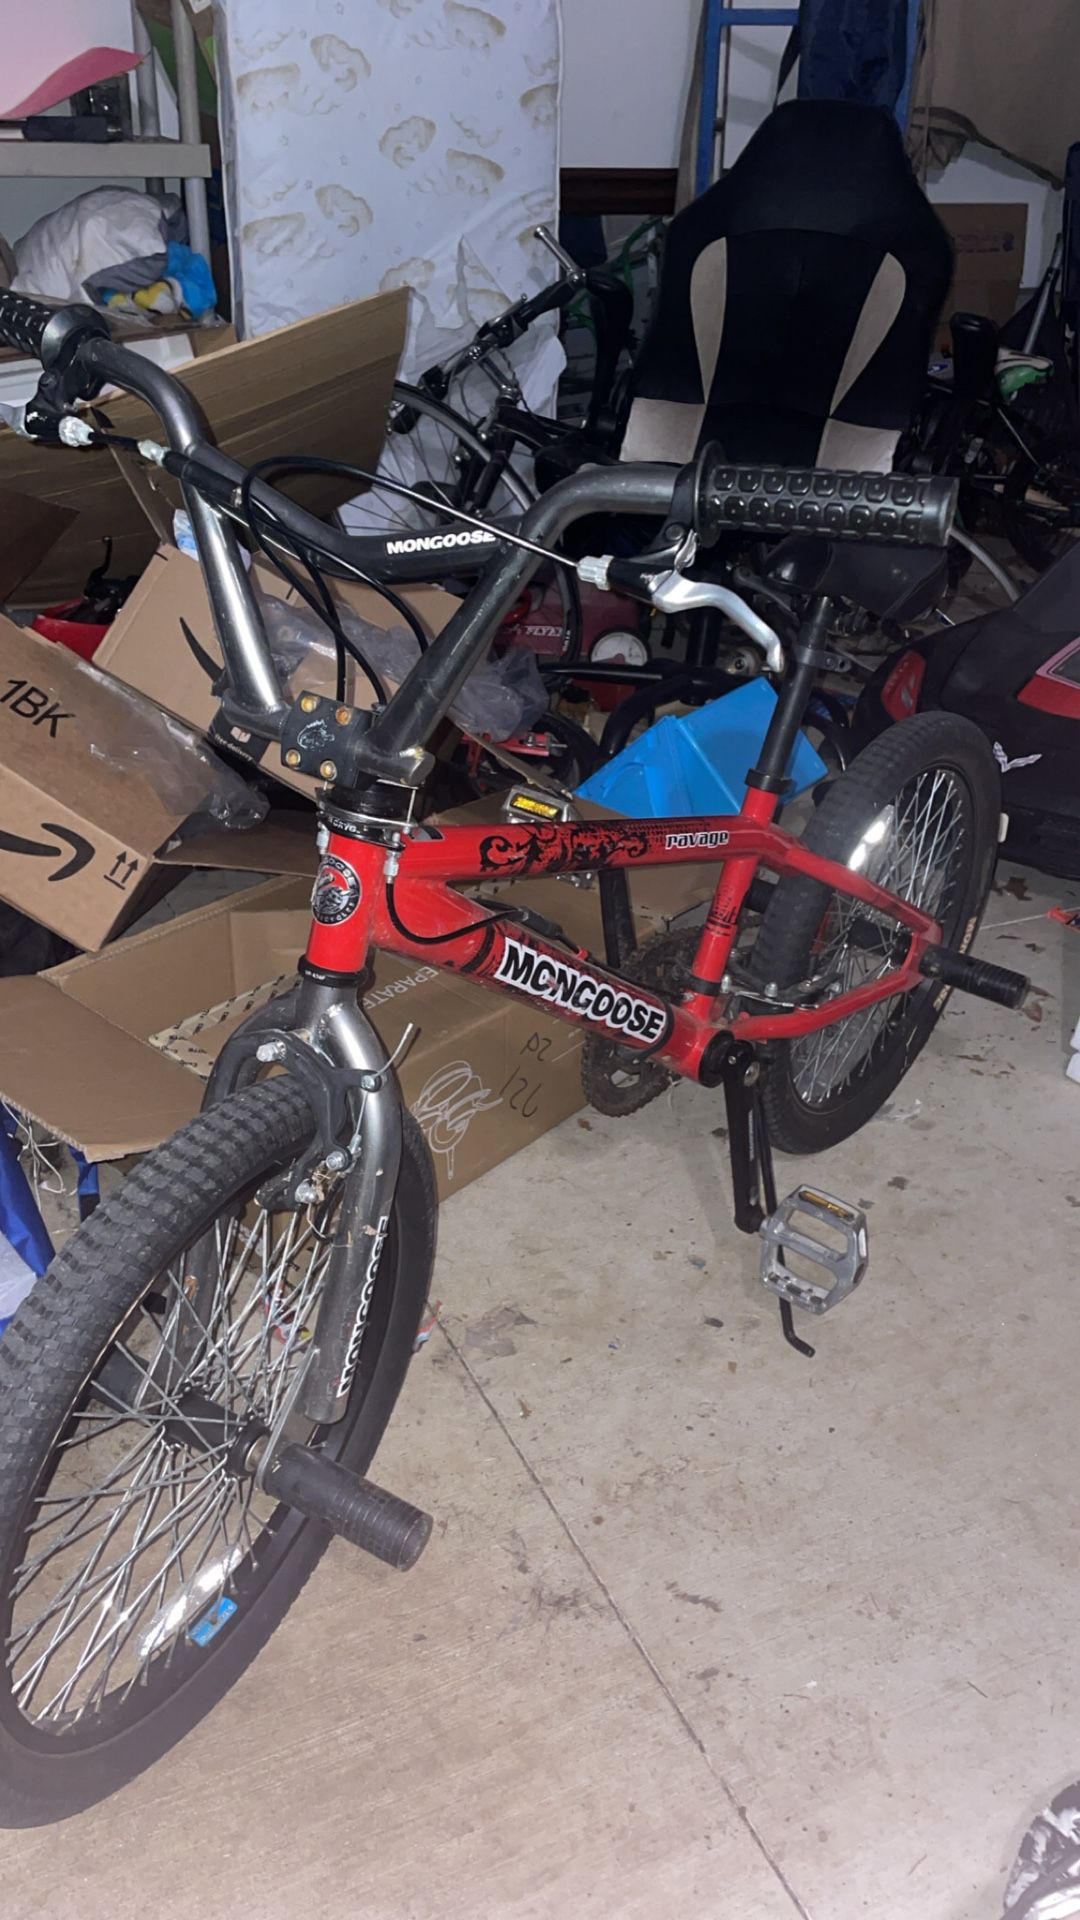 Mongoose BMX Bike 20-inch wheels